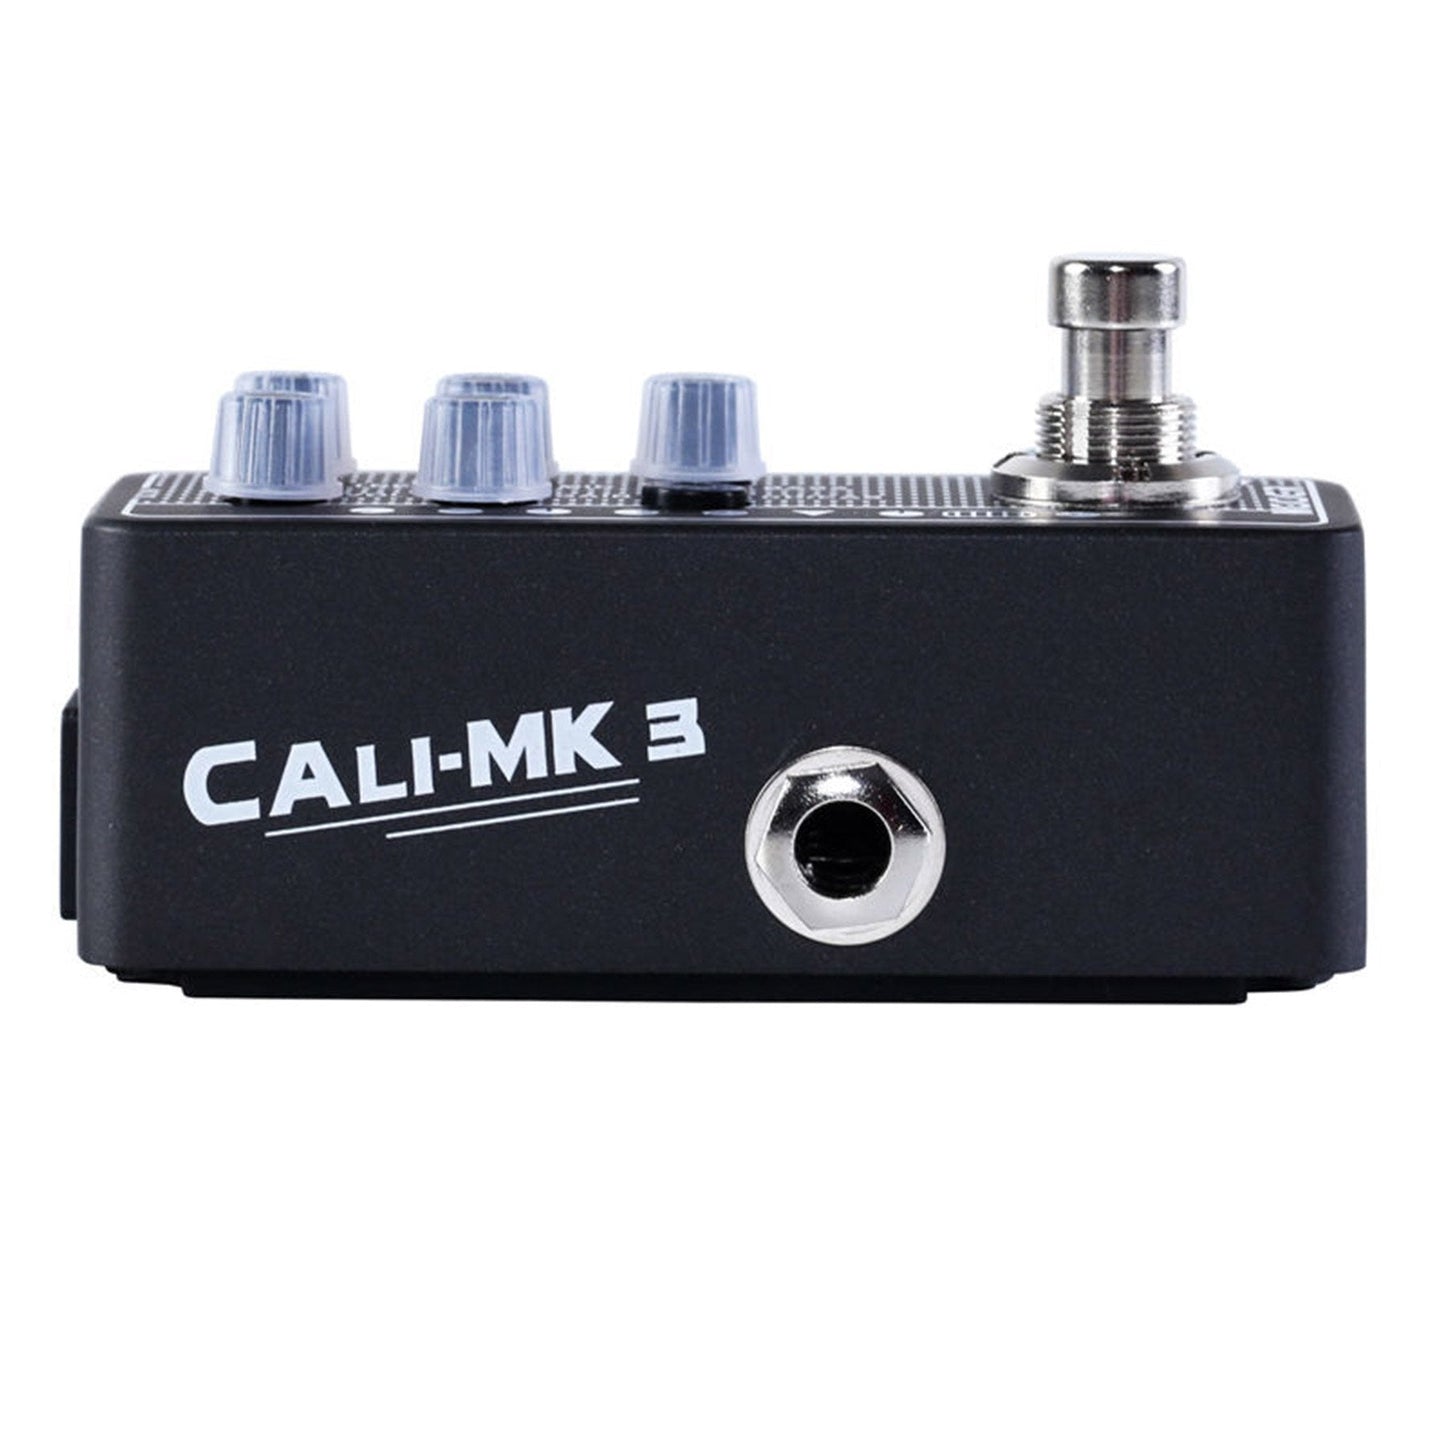 Mooer 'Cali-MK3 008' Digital Micro Preamp Guitar Effects Pedal